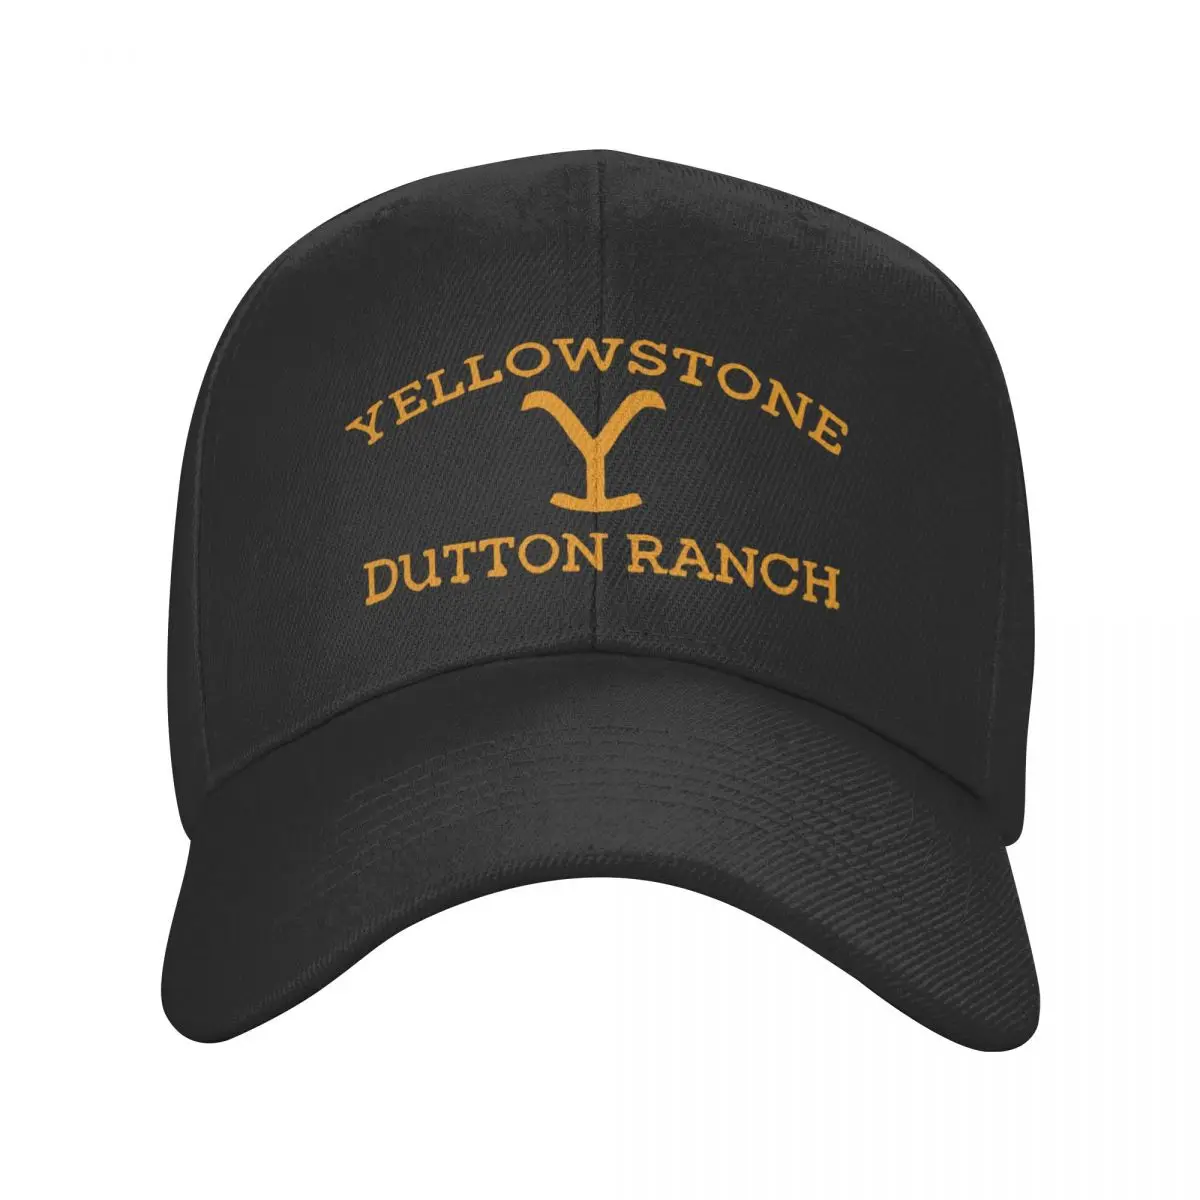 

New Cool Yellowstone Dutton Ranch Baseball Cap Women Men Personalized Adjustable Unisex Dad Hat Summer Caps Snapback Hats